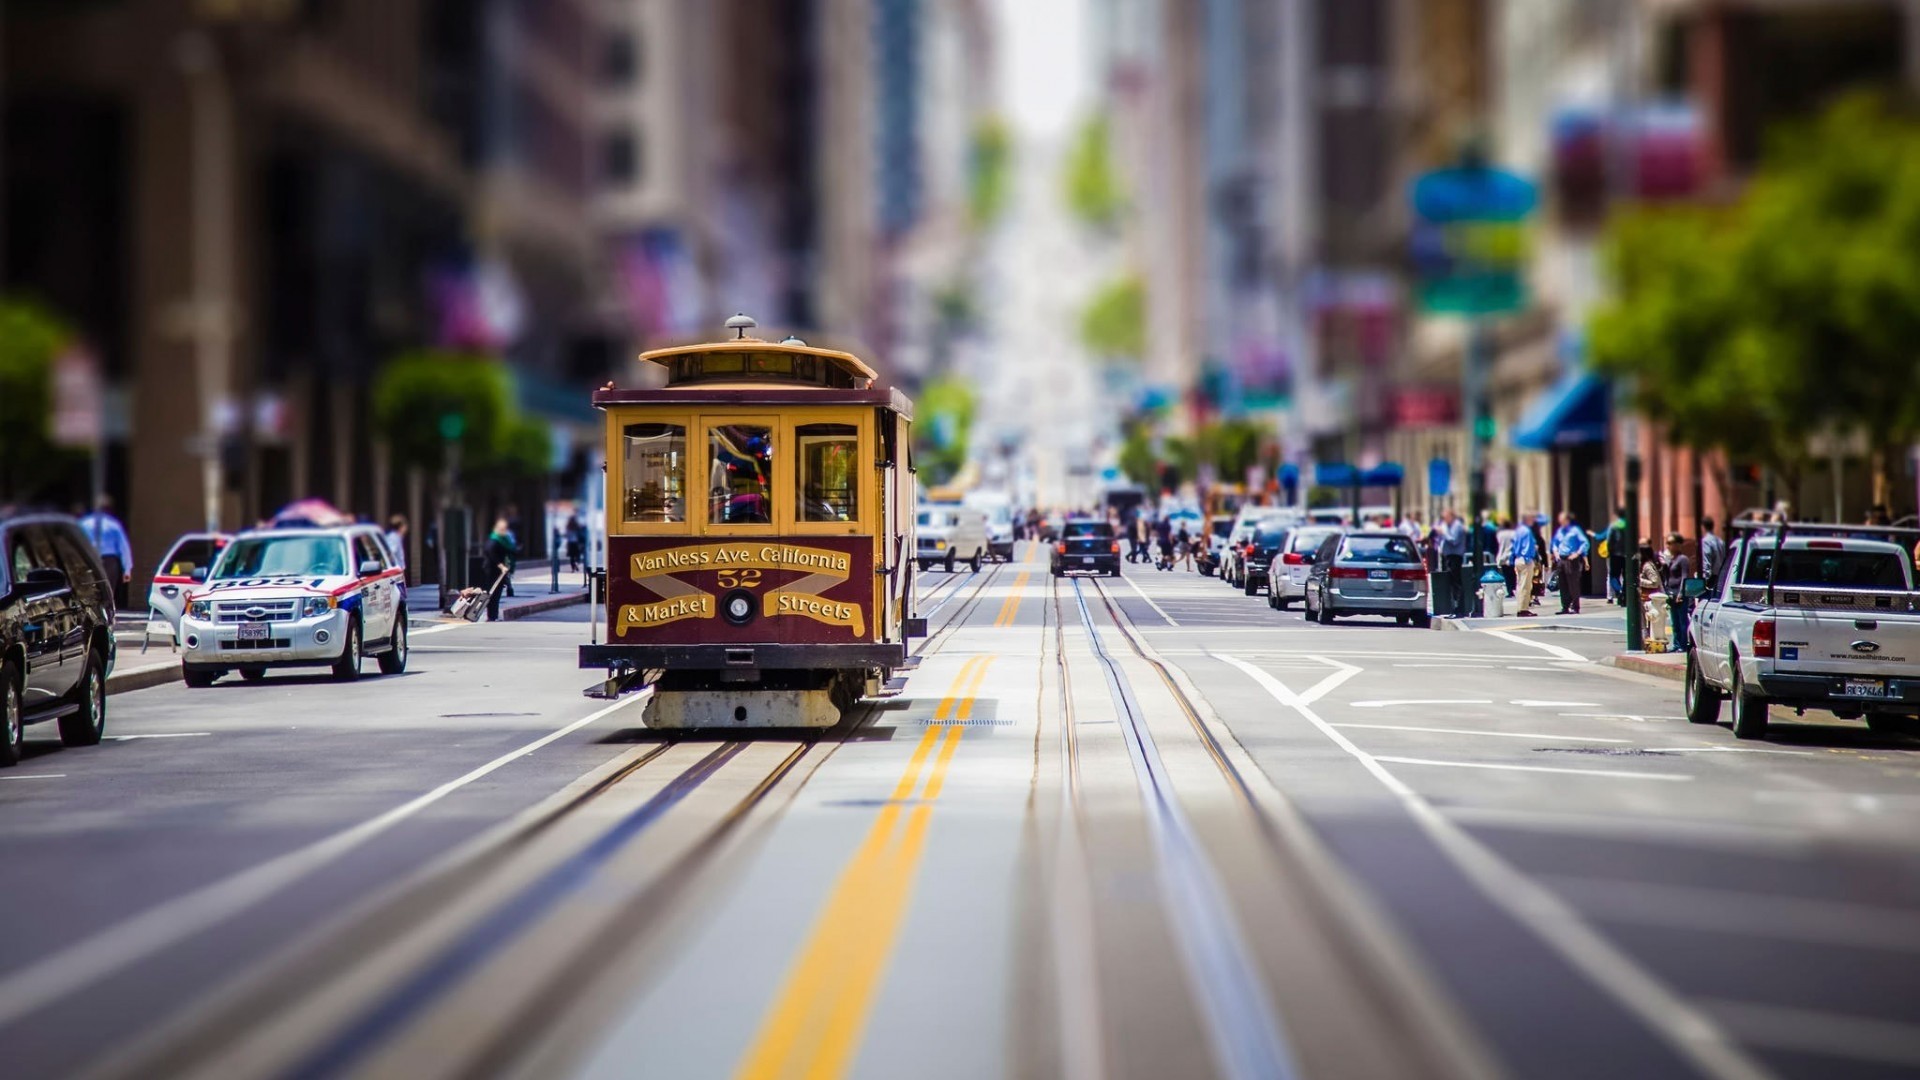 General 1920x1080 cityscape San Francisco tram USA vehicle car traffic